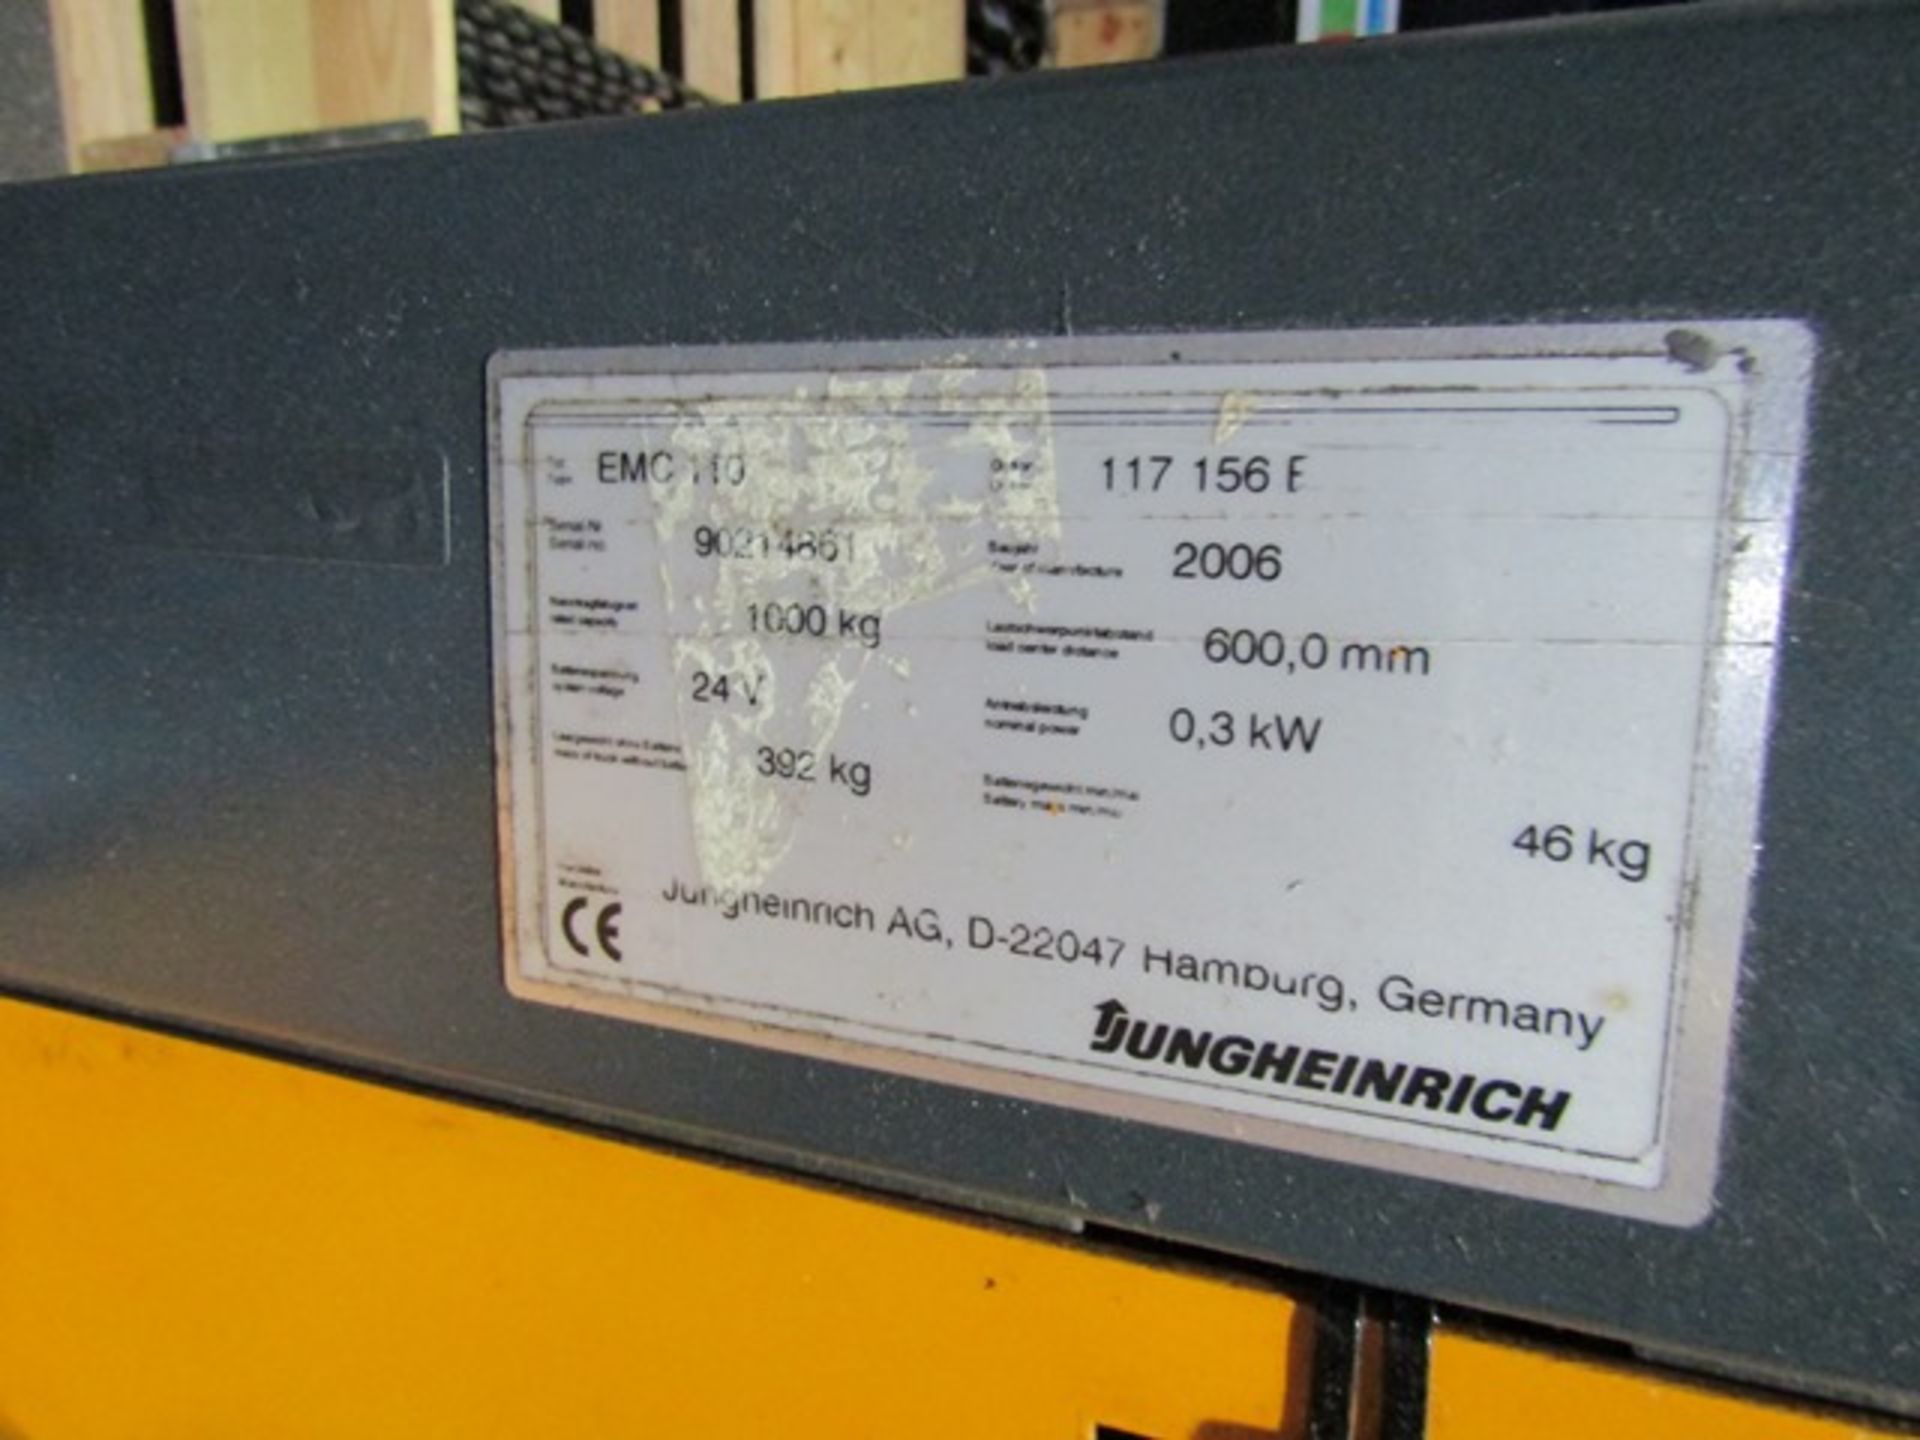 Jungheinrich EMC110 pedestrian battery operated, pallet truck/forklift truck, serial no: 90214861, - Image 4 of 4